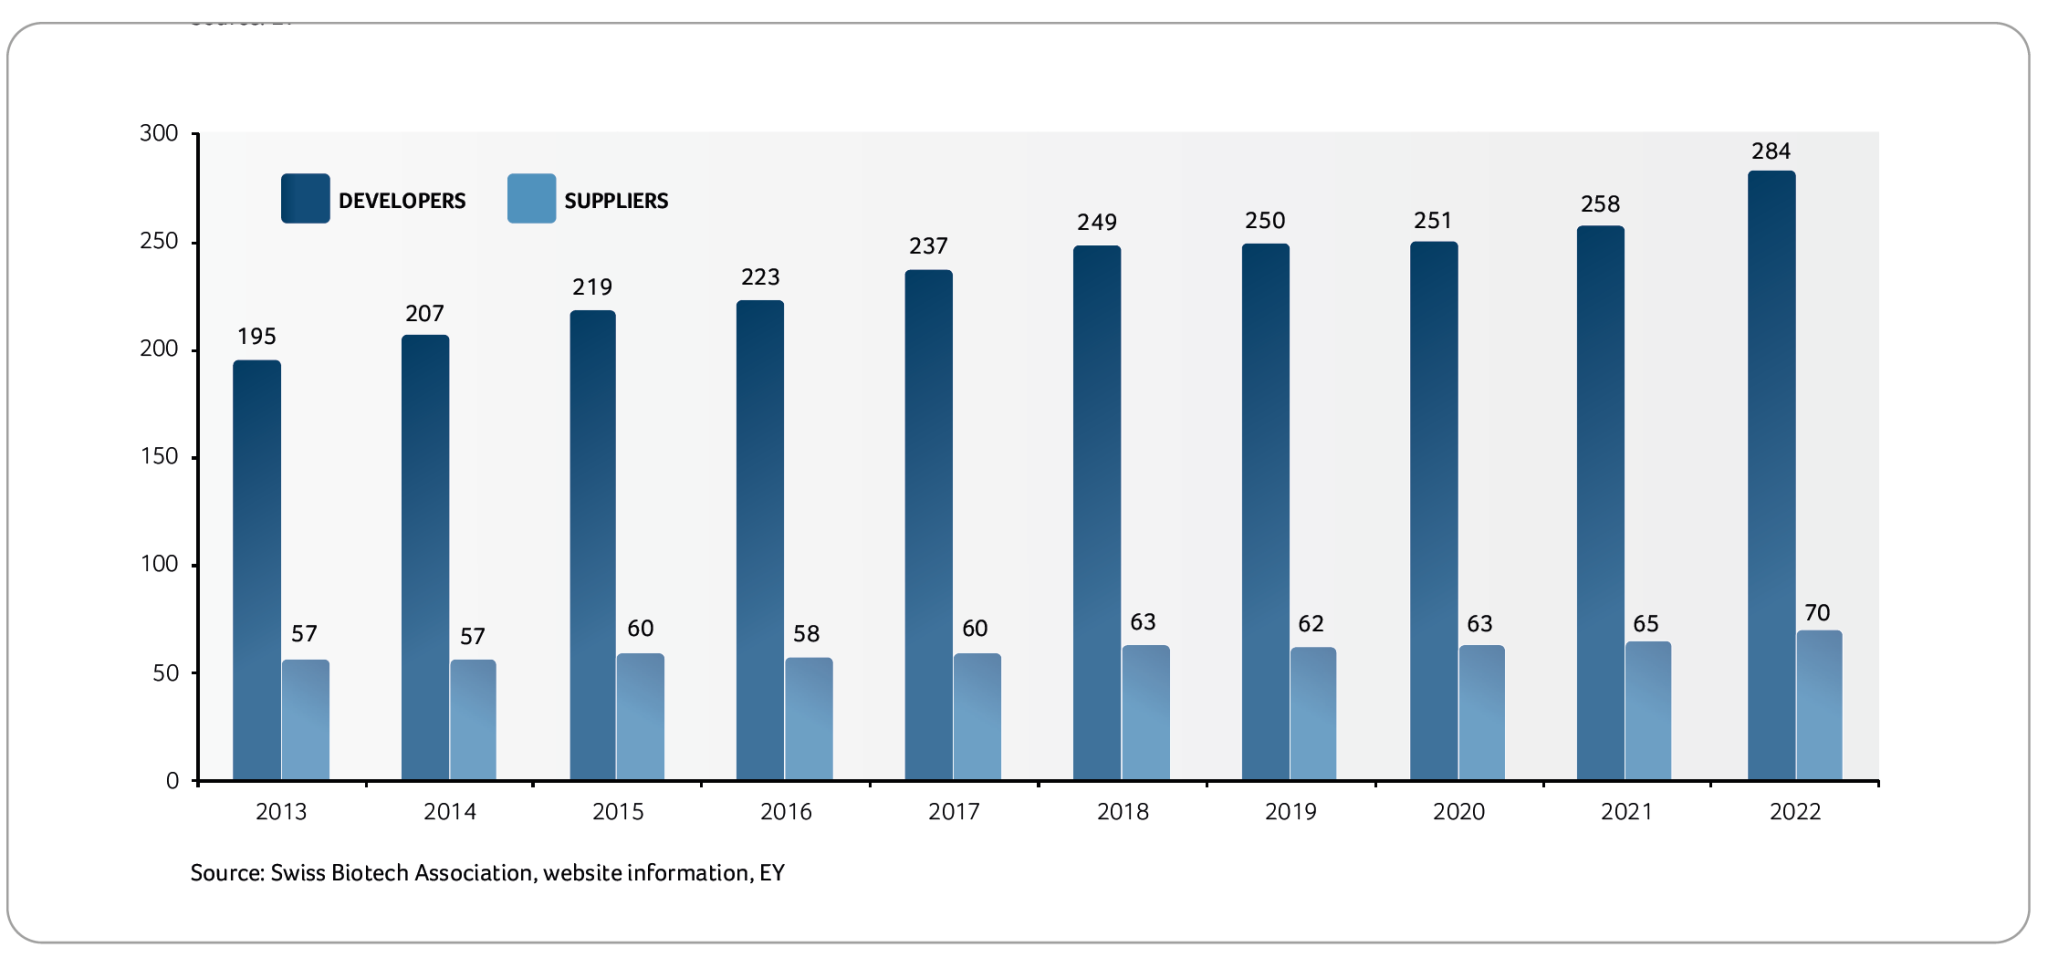 Number of biotech companies in Switzerland 2013-2022